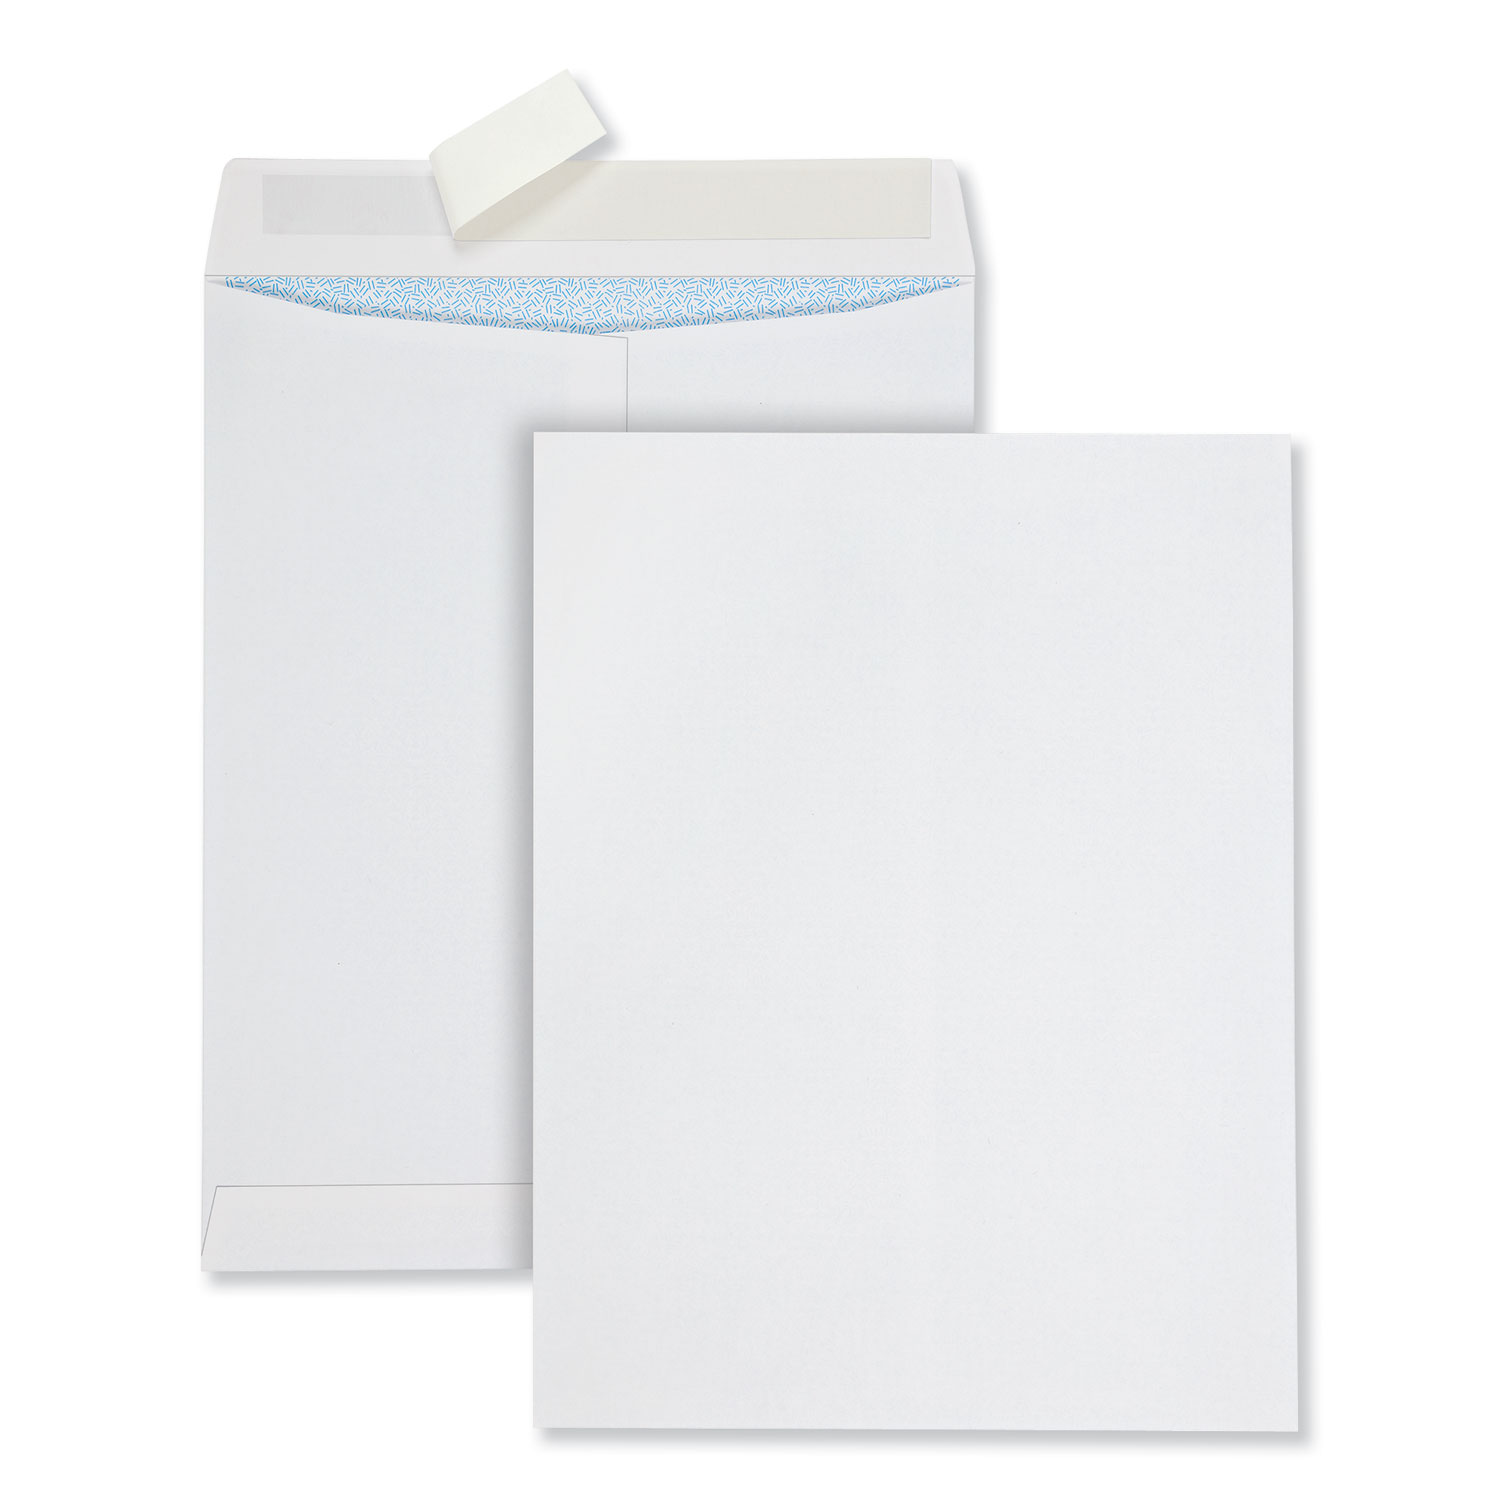 Redi-Strip Security Tinted Envelope, #13 1/2, Square Flap, Redi-Strip Closure, 10 x 13, White, 500/Box